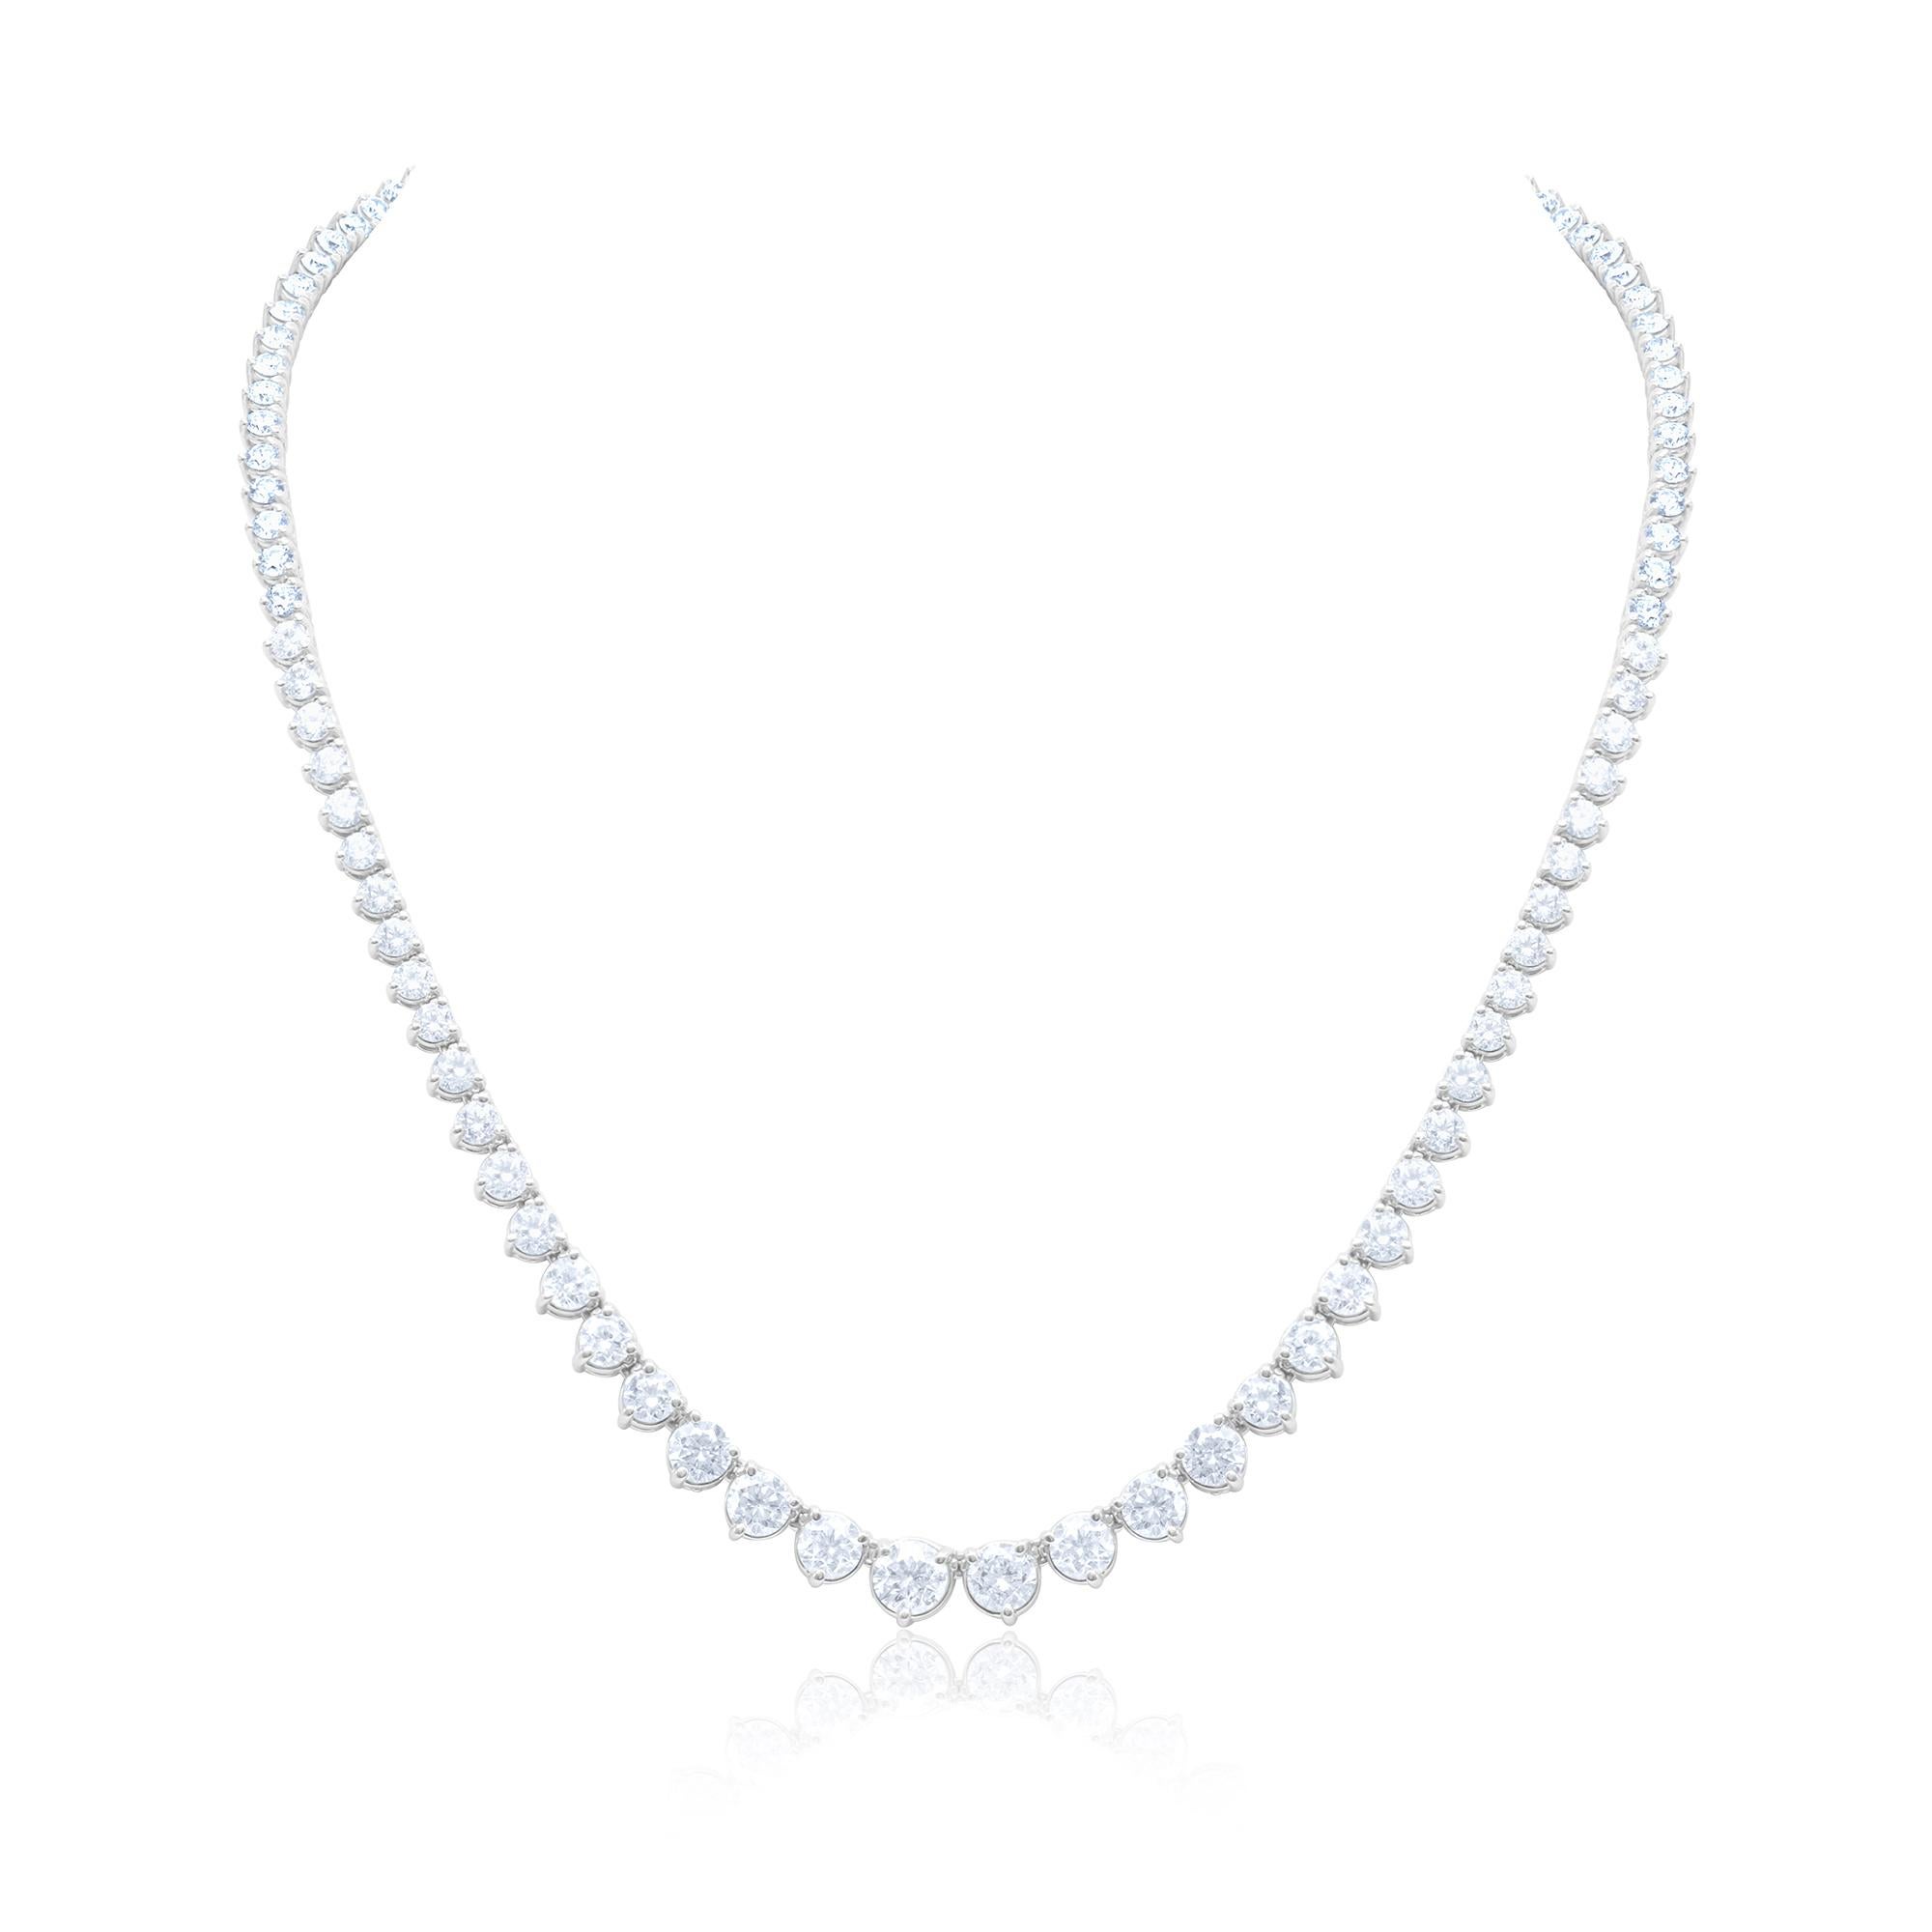 5 carat tennis necklace price